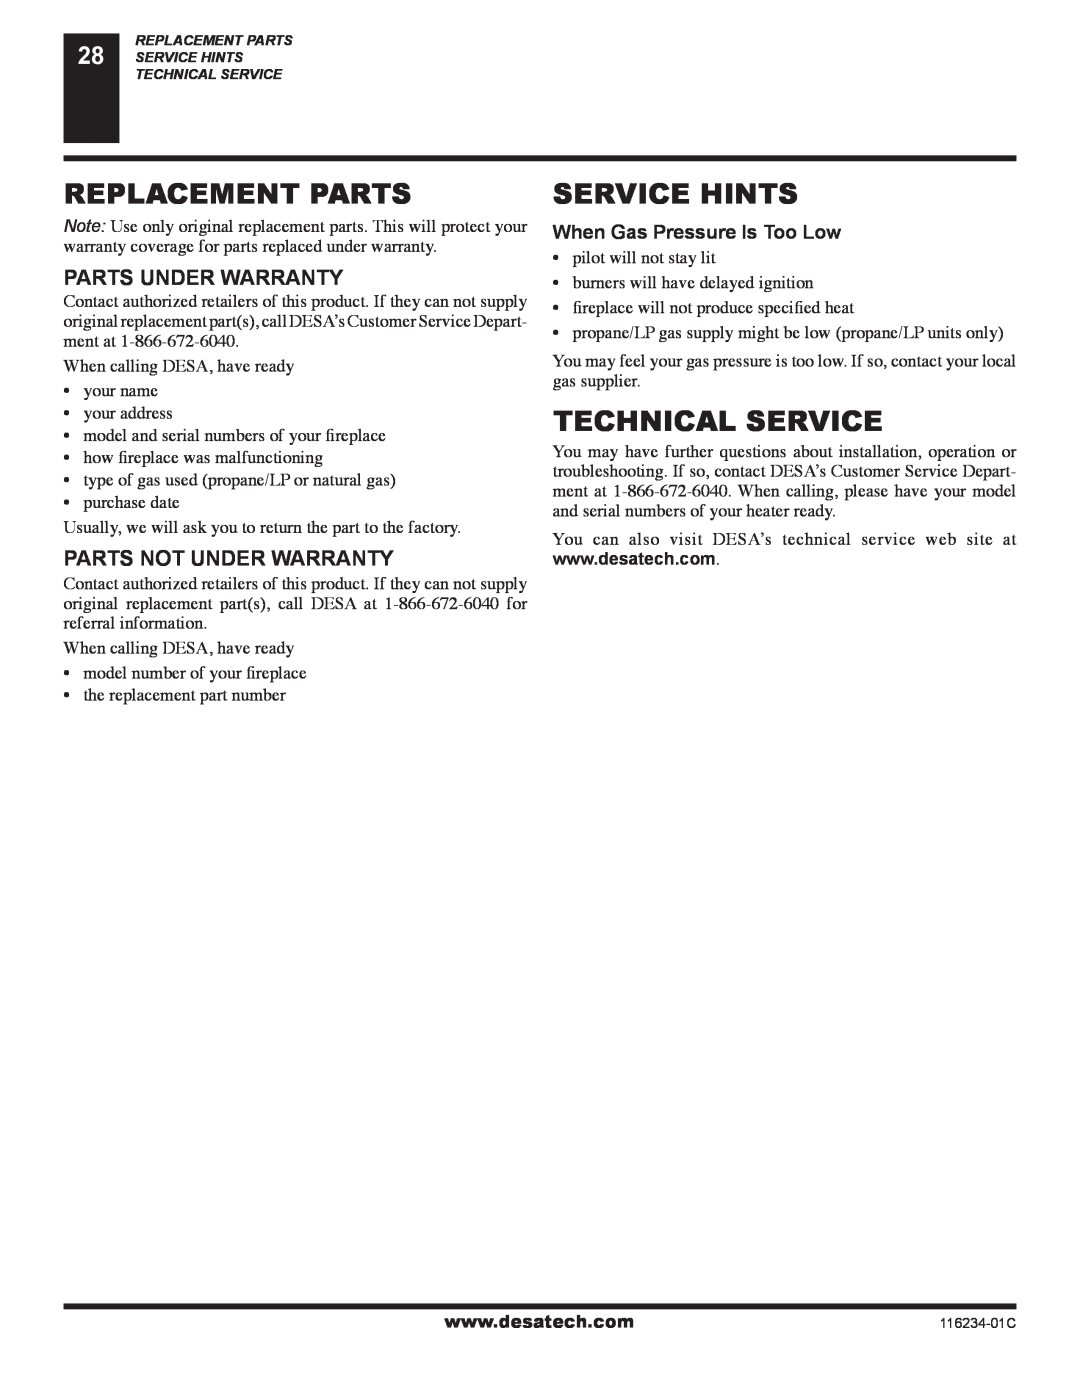 Desa (V)TC36PE SERIES Replacement Parts, Service Hints, Technical Service, Parts Under Warranty, Parts Not Under Warranty 